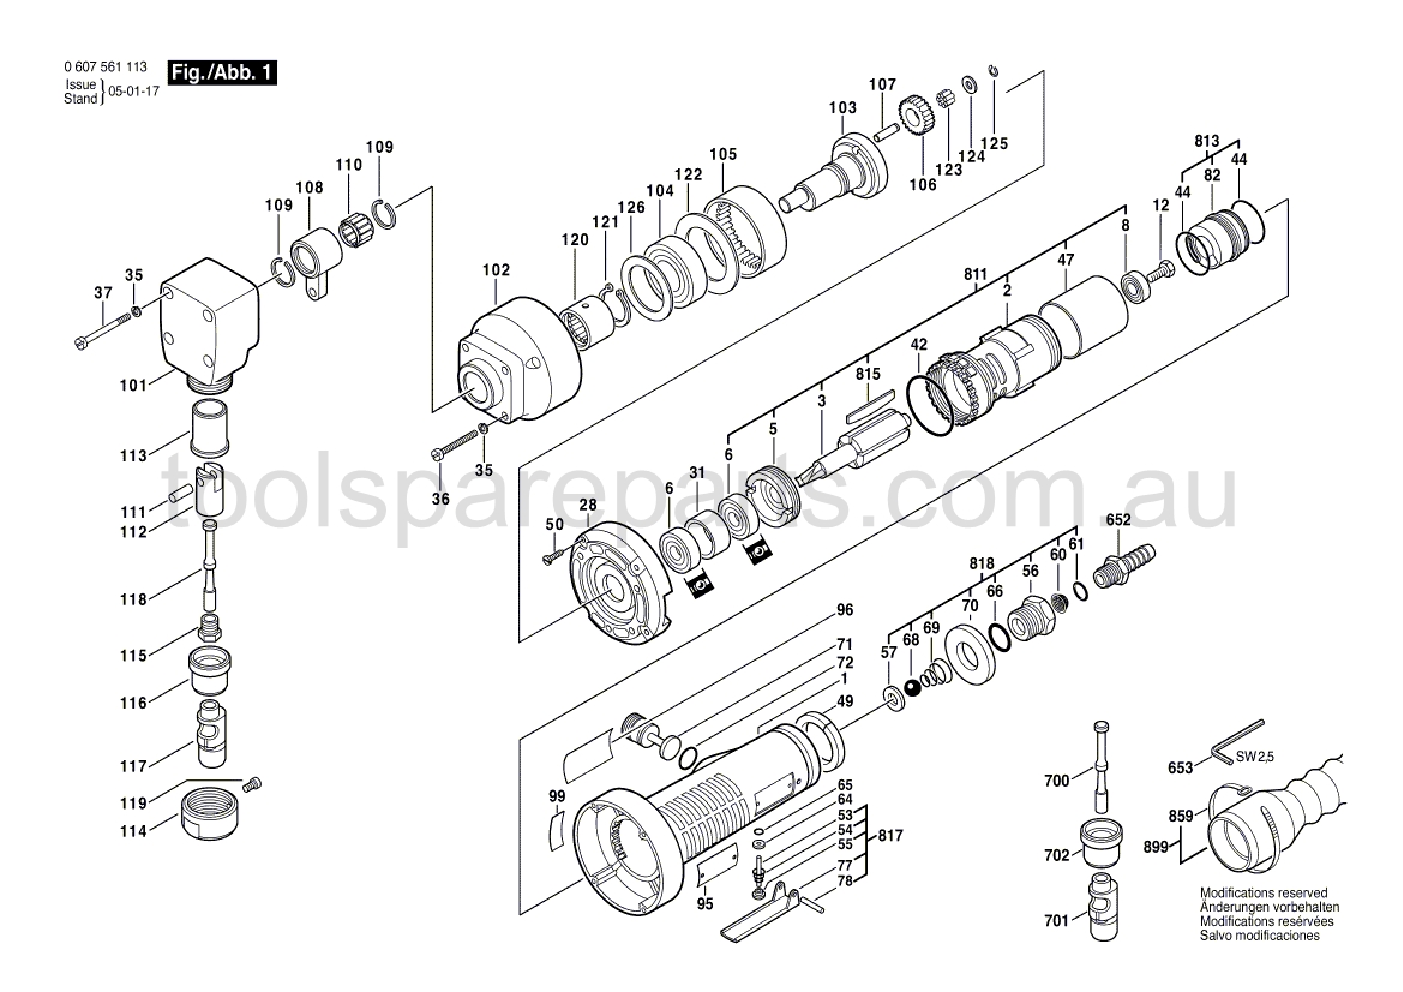 Bosch 400 WATT-SERIE 0607561113  Diagram 1